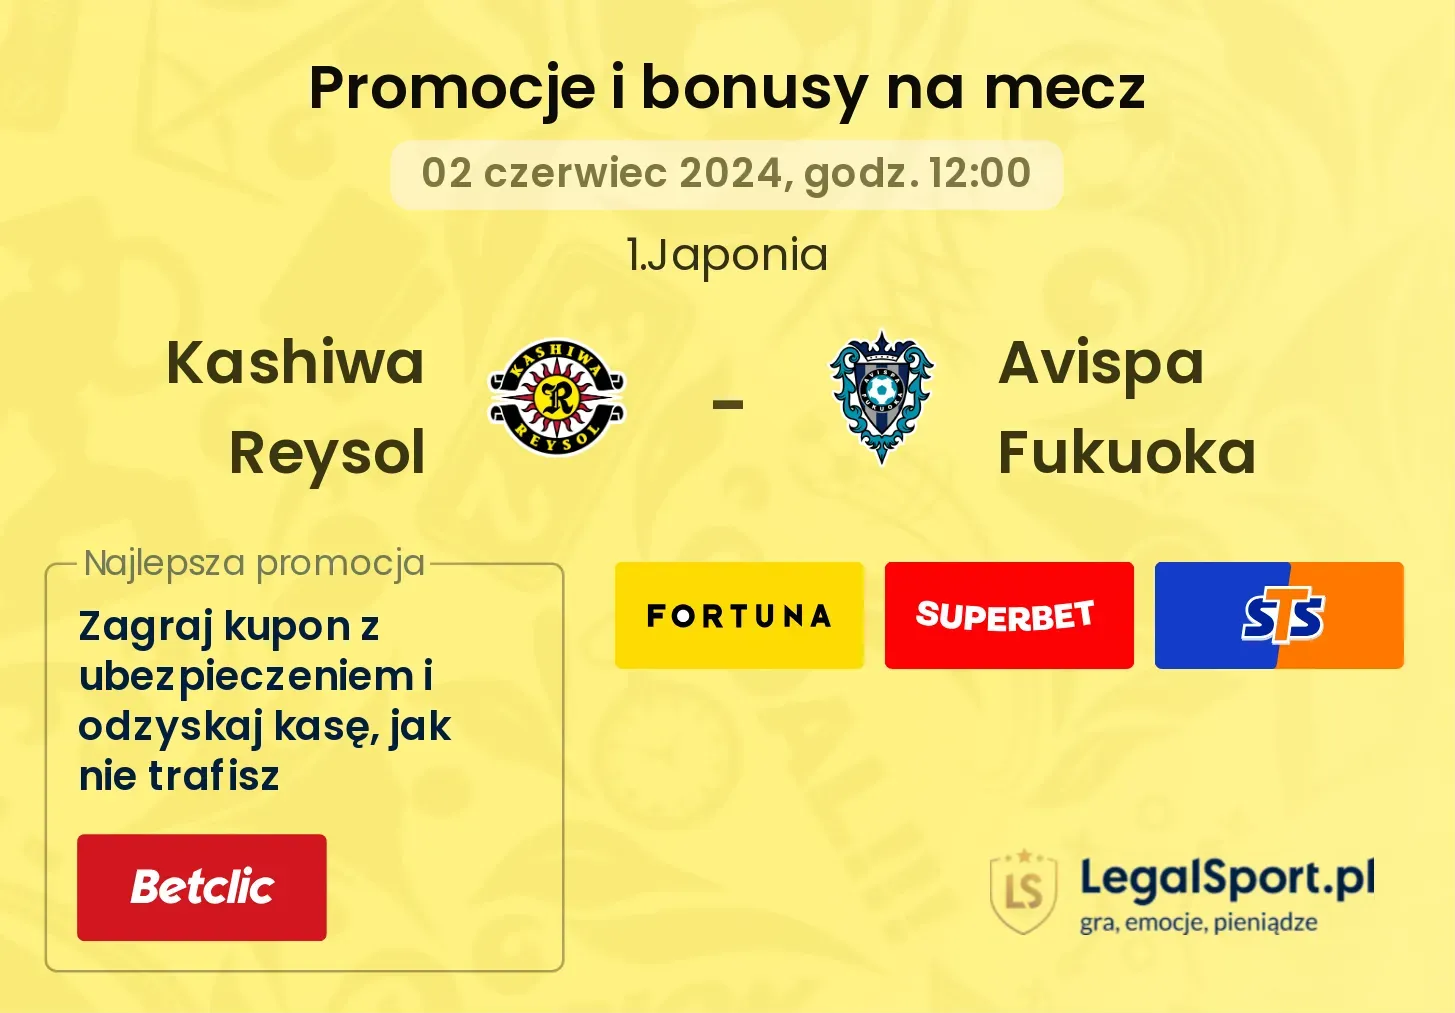 Kashiwa Reysol - Avispa Fukuoka bonusy i promocje (02.06, 12:00)